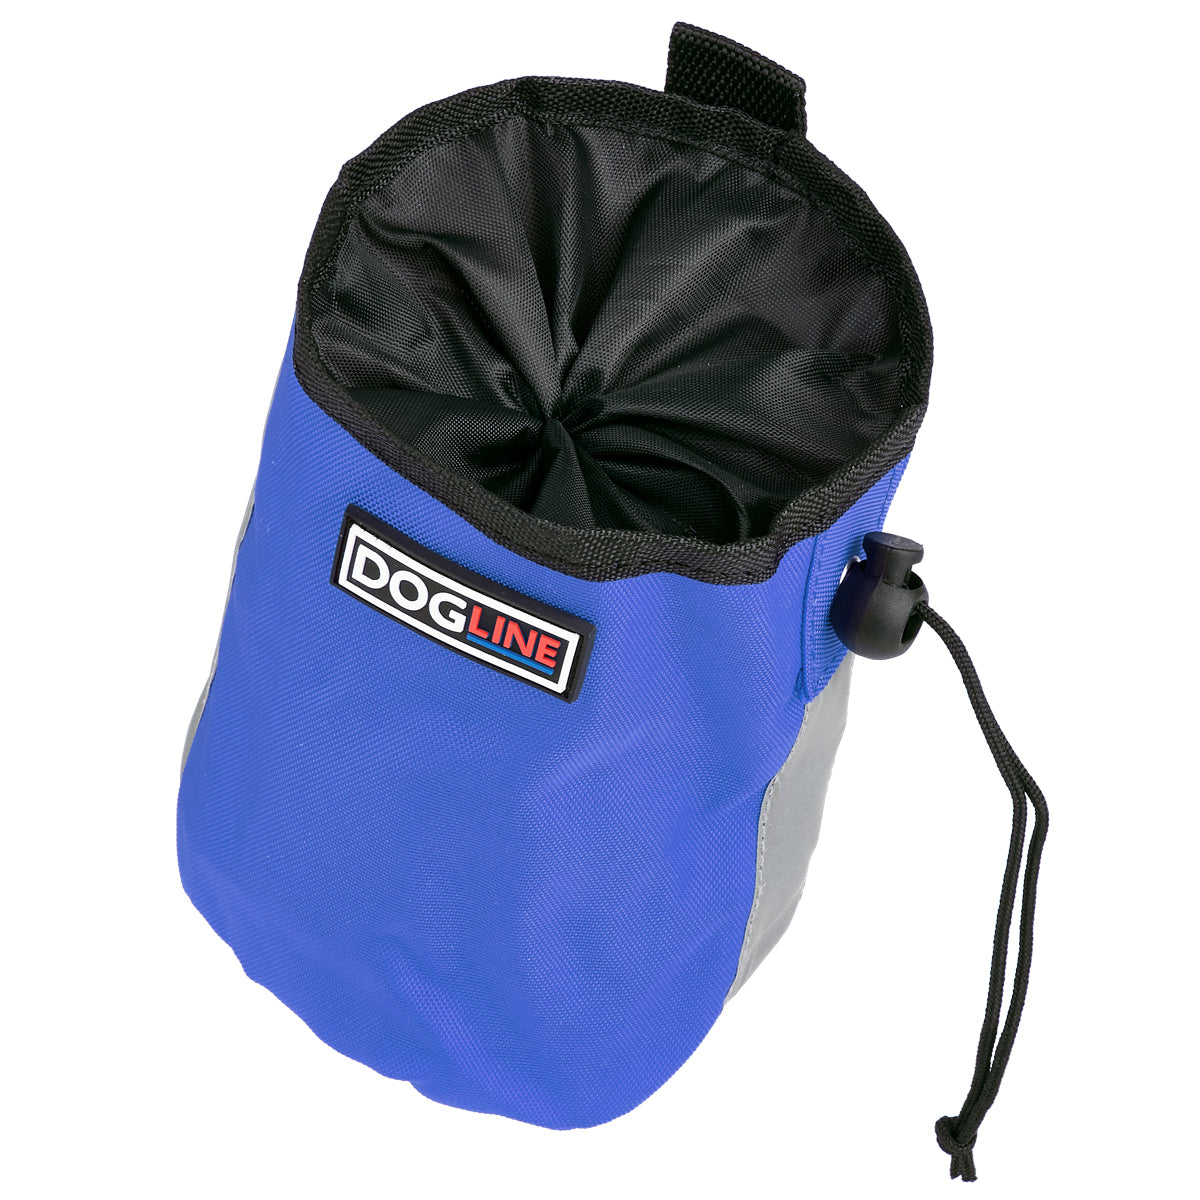 Outward Hound Treat & Ball Bags (Blue), On Sale